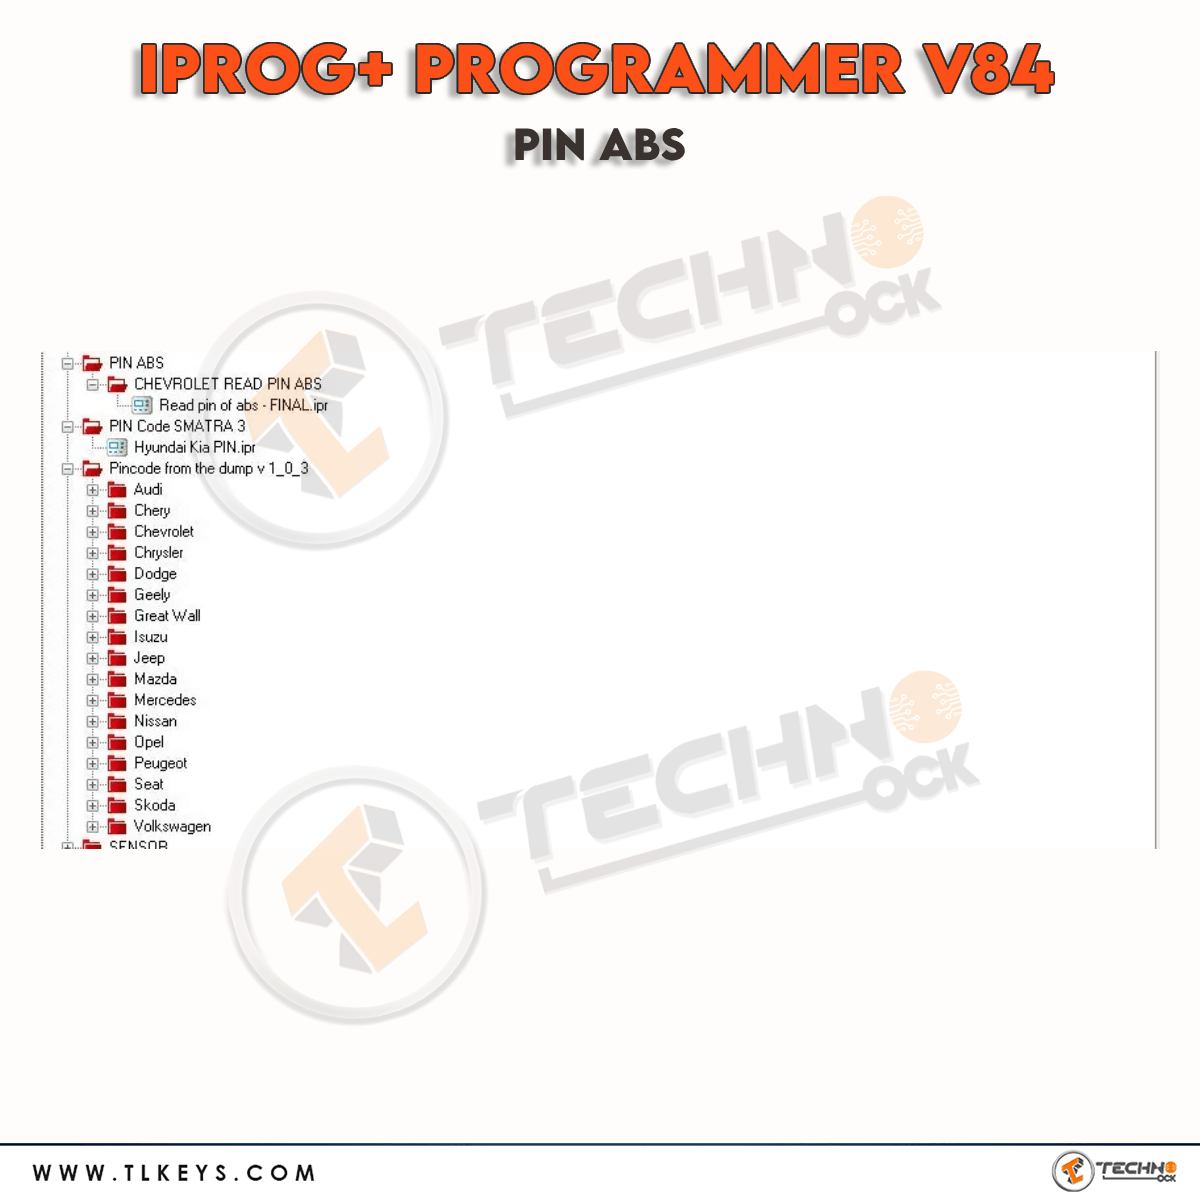  PIN ABS Iprog+ Programmer 